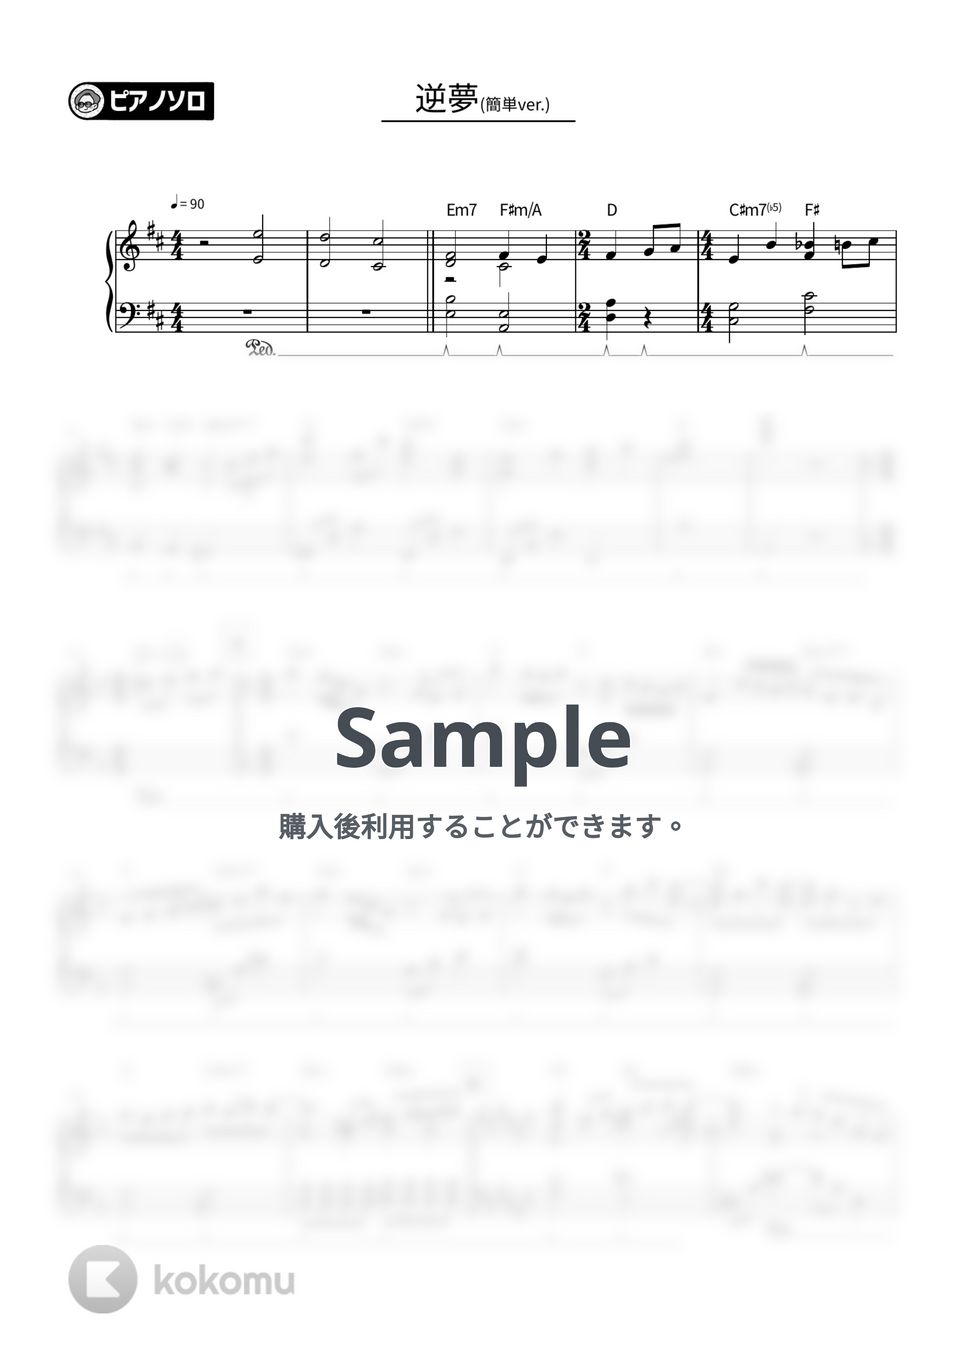 KingGnu - 逆夢 (簡単ver.) by シータピアノ